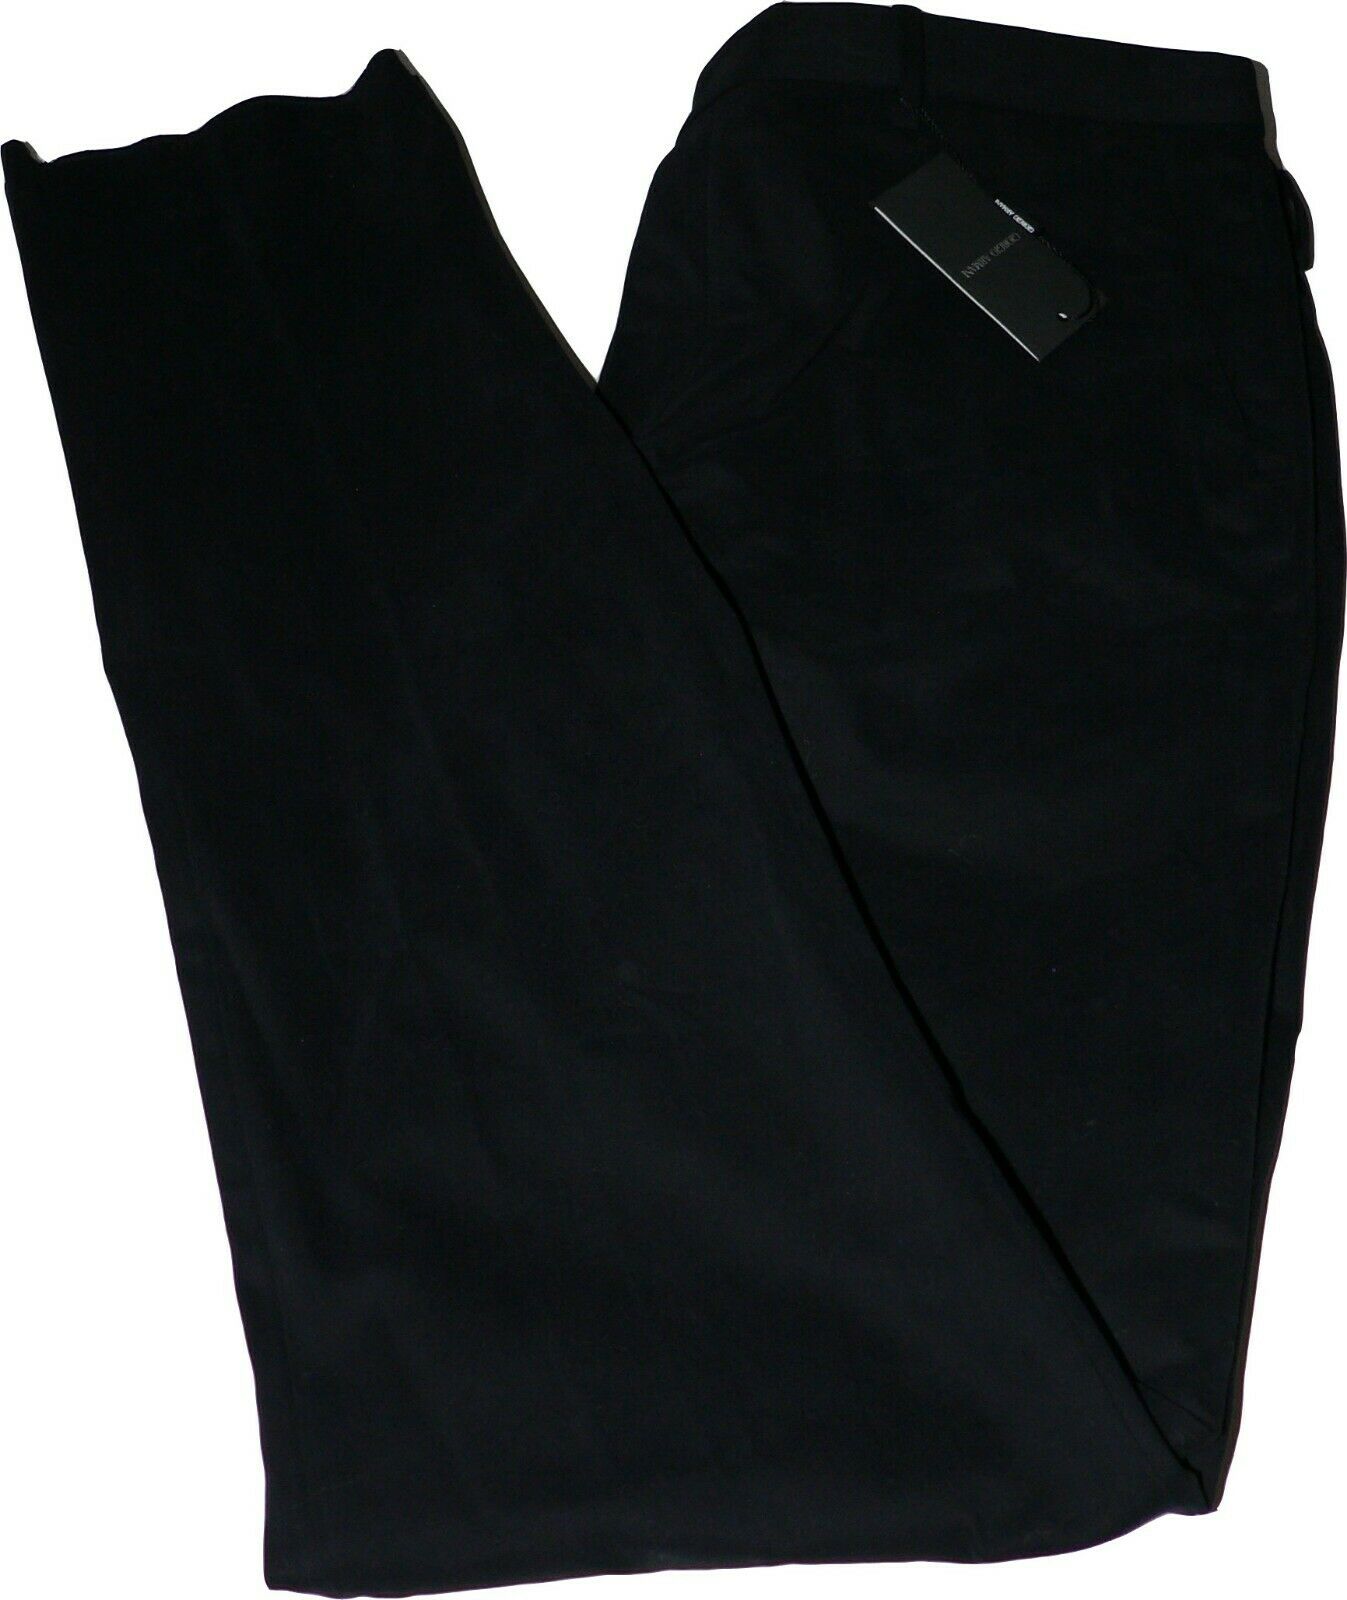 GIORGIO ARMANI black label 56 40 slacks pants men's soft cotton